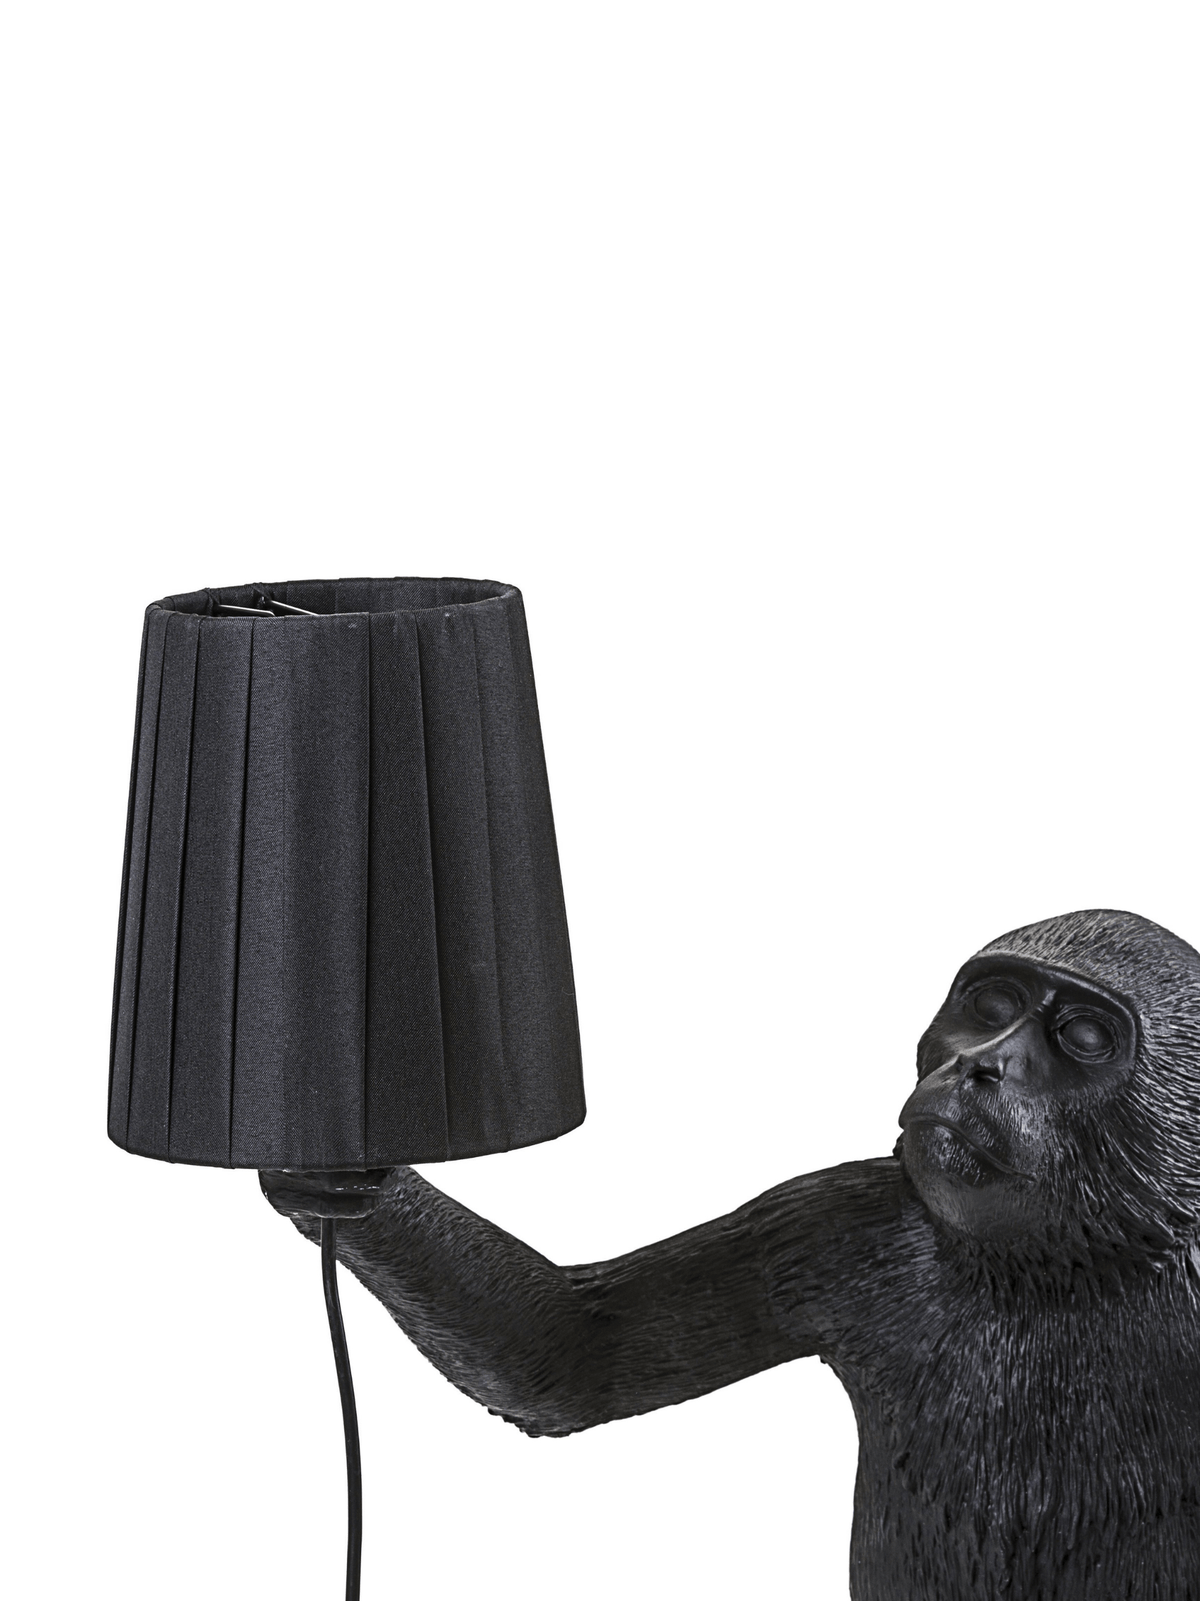 Monkey Lampshade / Black Seletti Seletti 